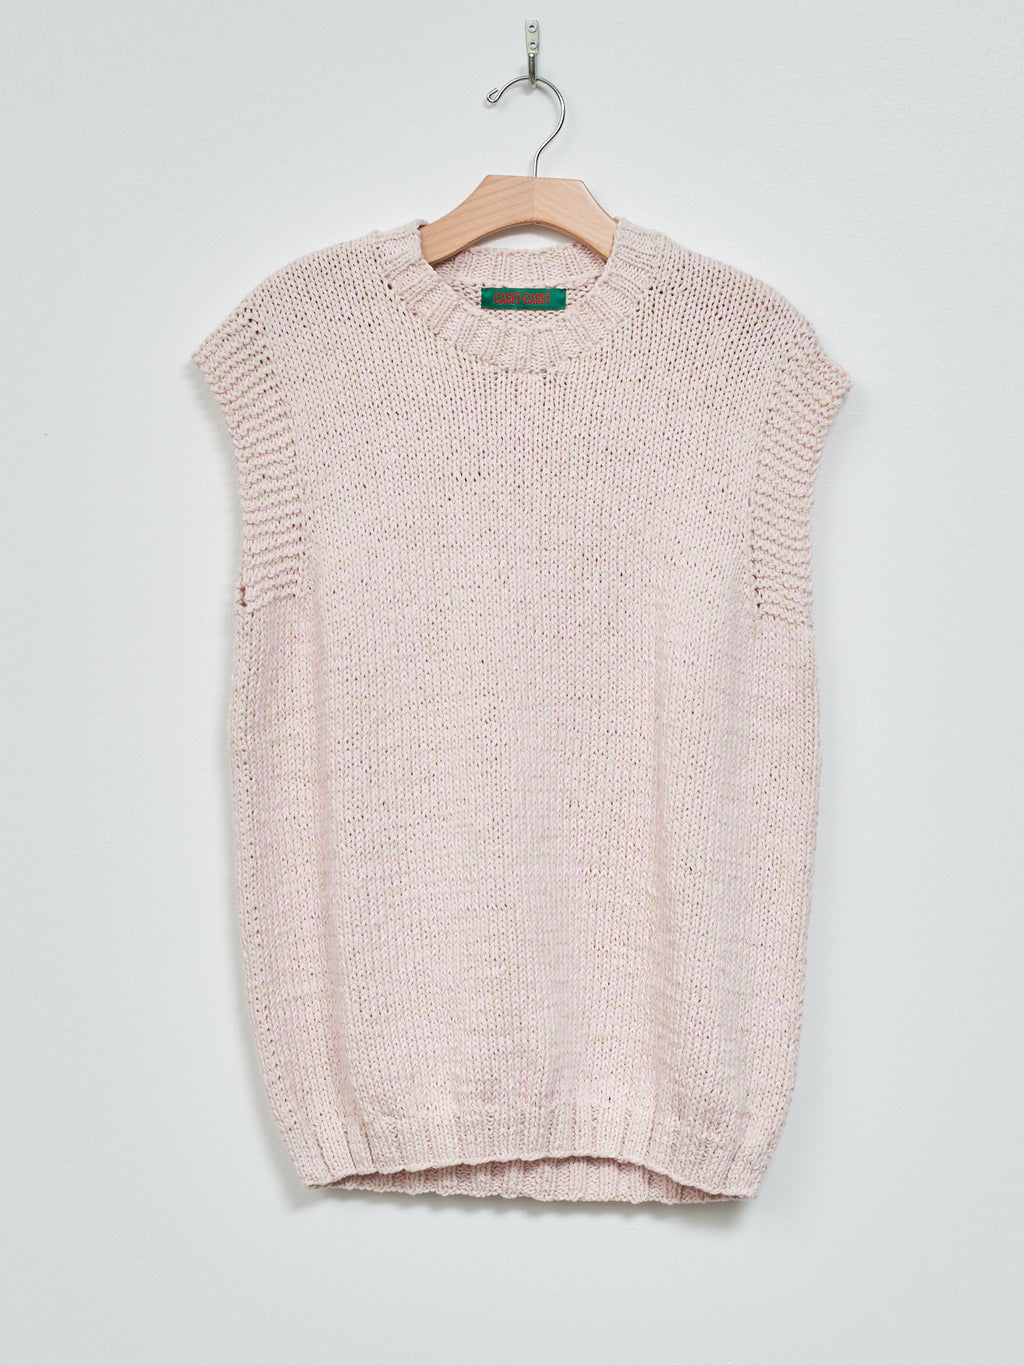 Namu Shop - Casey Casey Sleeveless Sweater - Pink